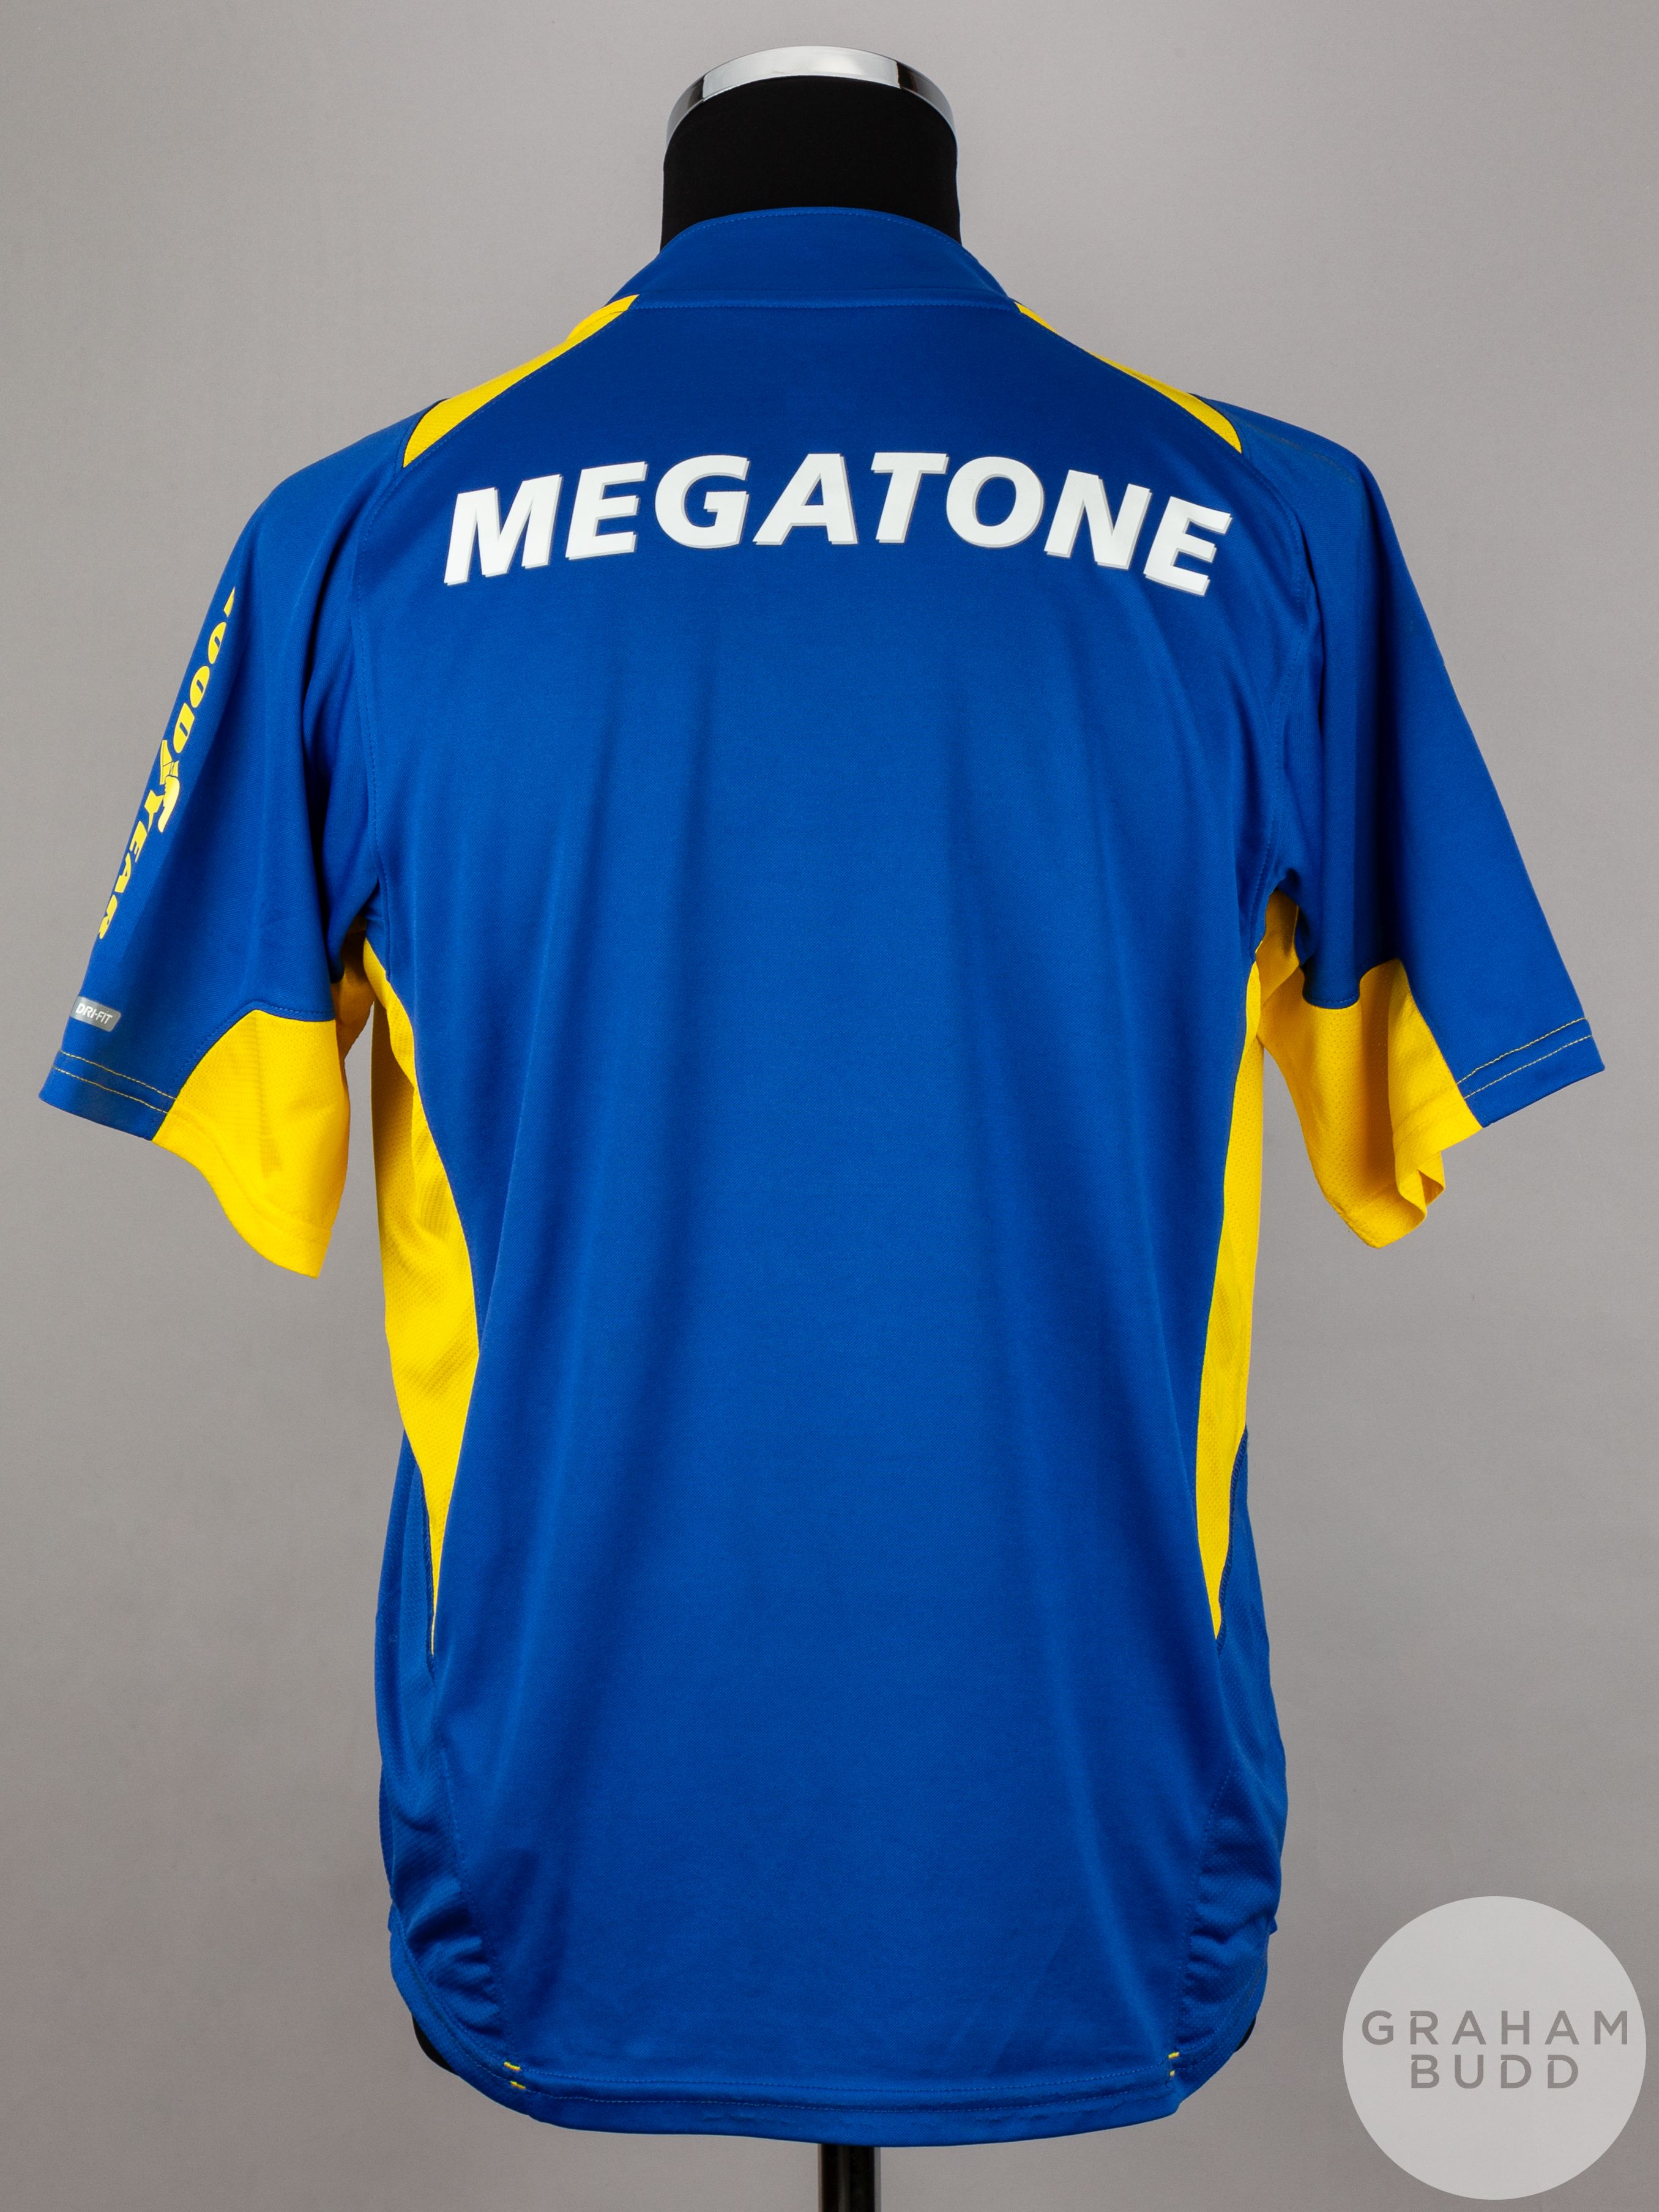 Diego Maradona signed blue & yellow Boca Juniors home shirt, season 2005-06, - Image 2 of 5